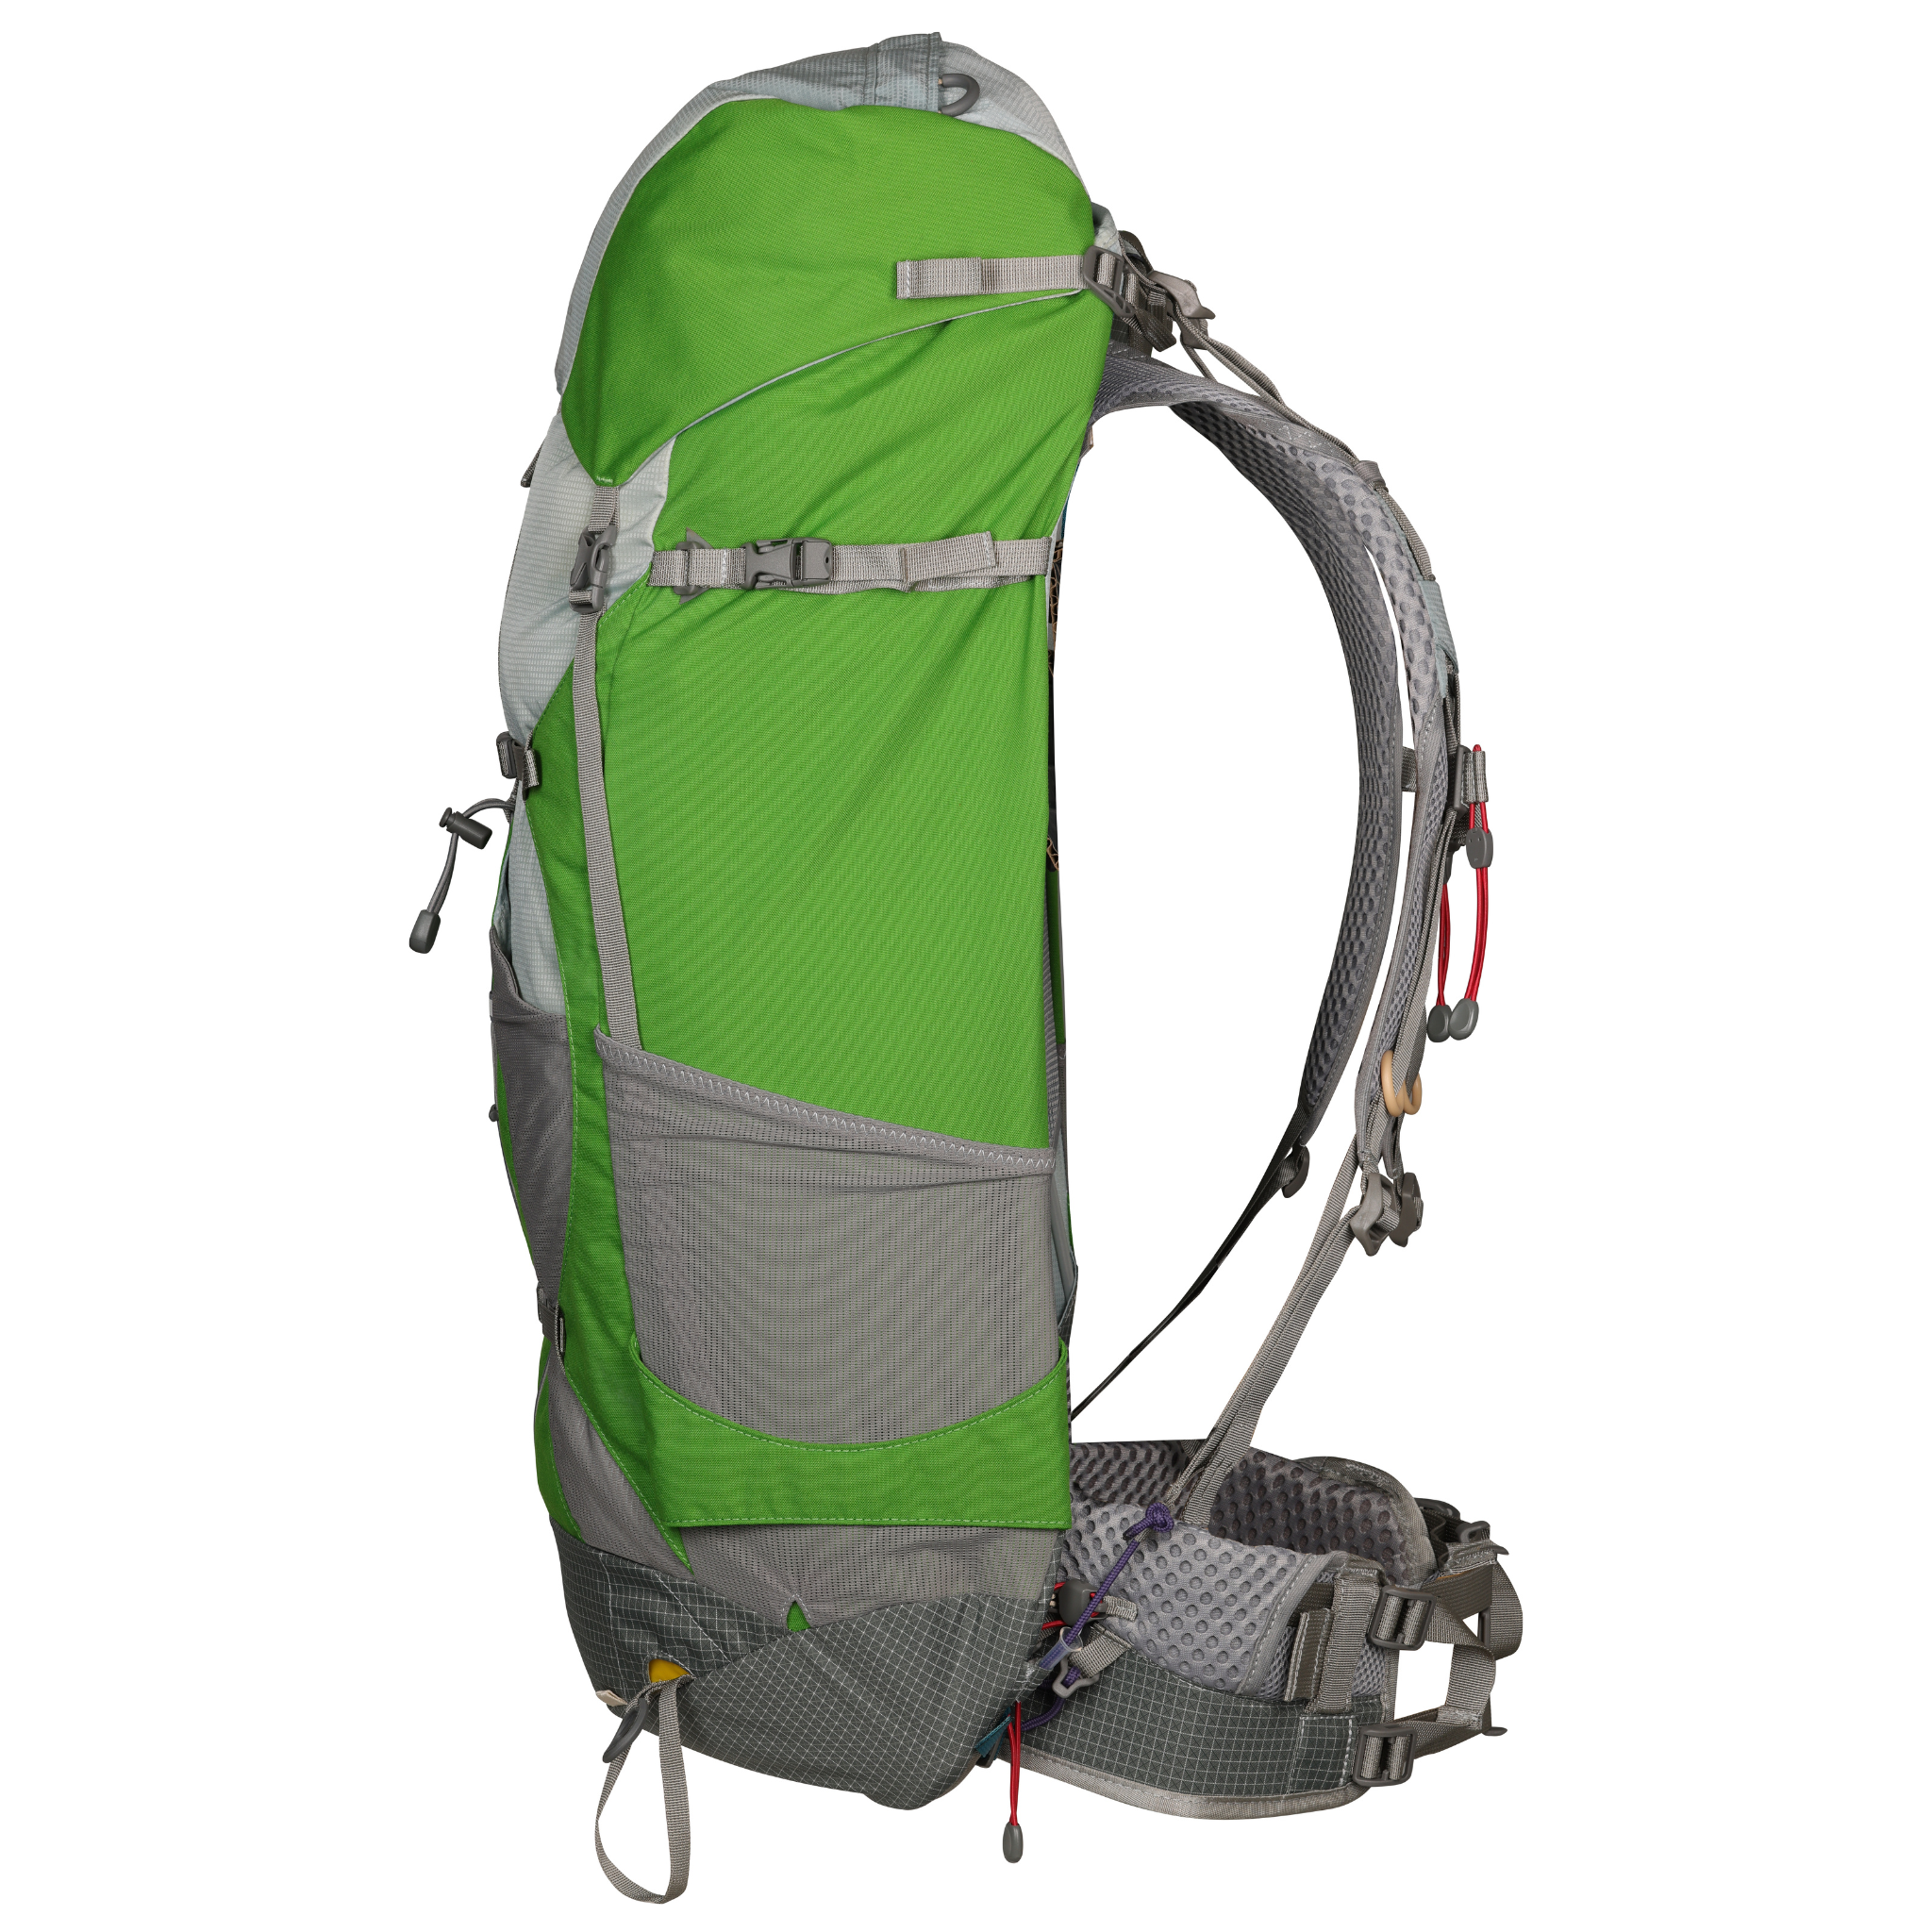 Aarn Peak Aspiration 50-60 Liter Backpack - Light Hiking Gear